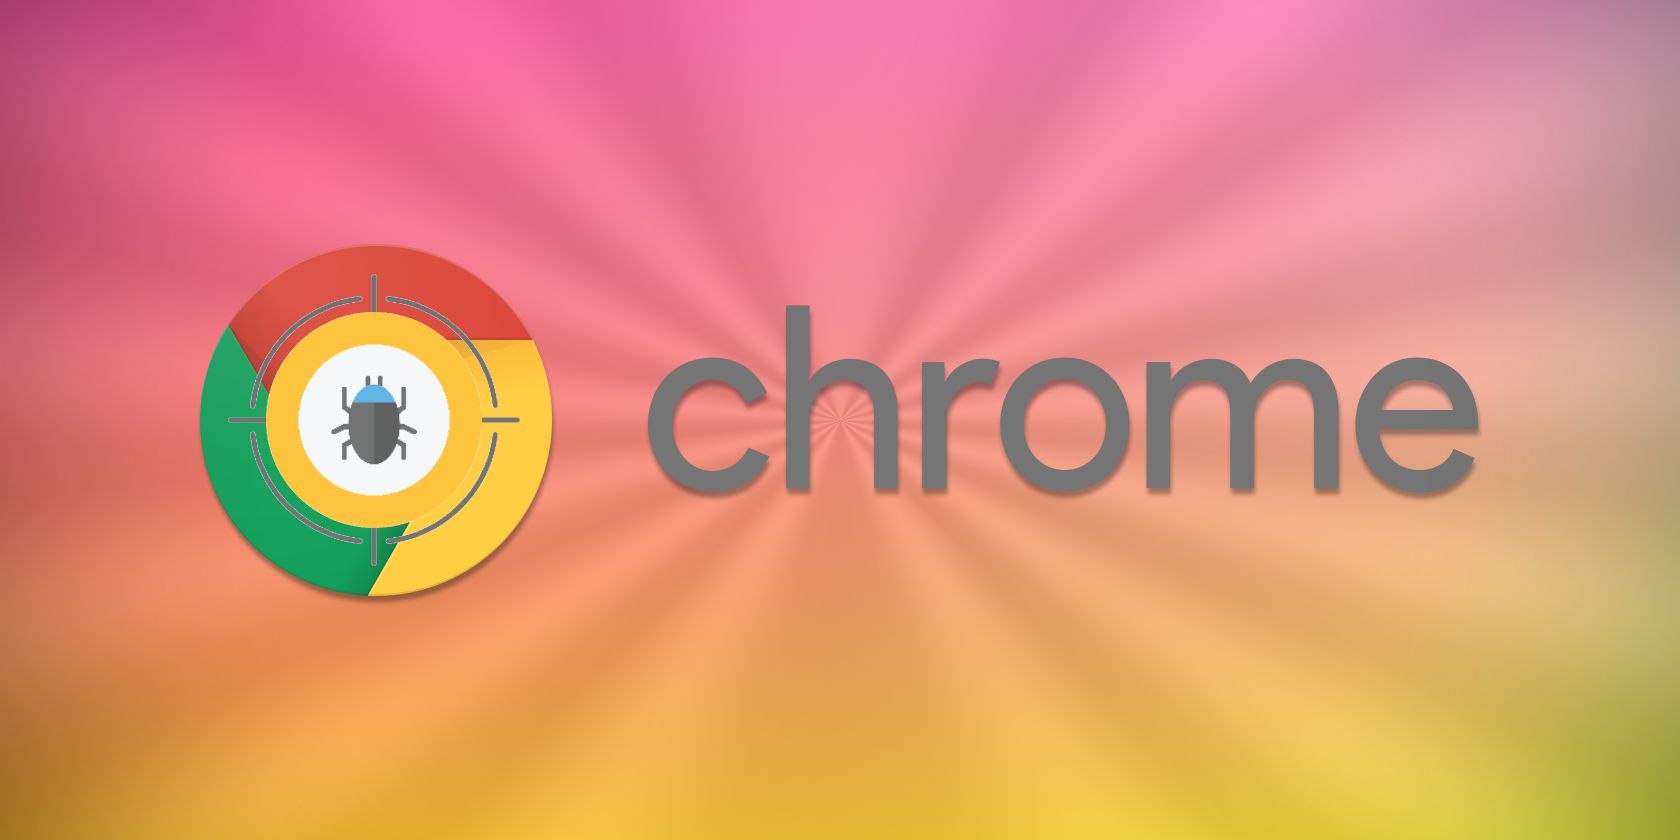 chrome malware logo feature